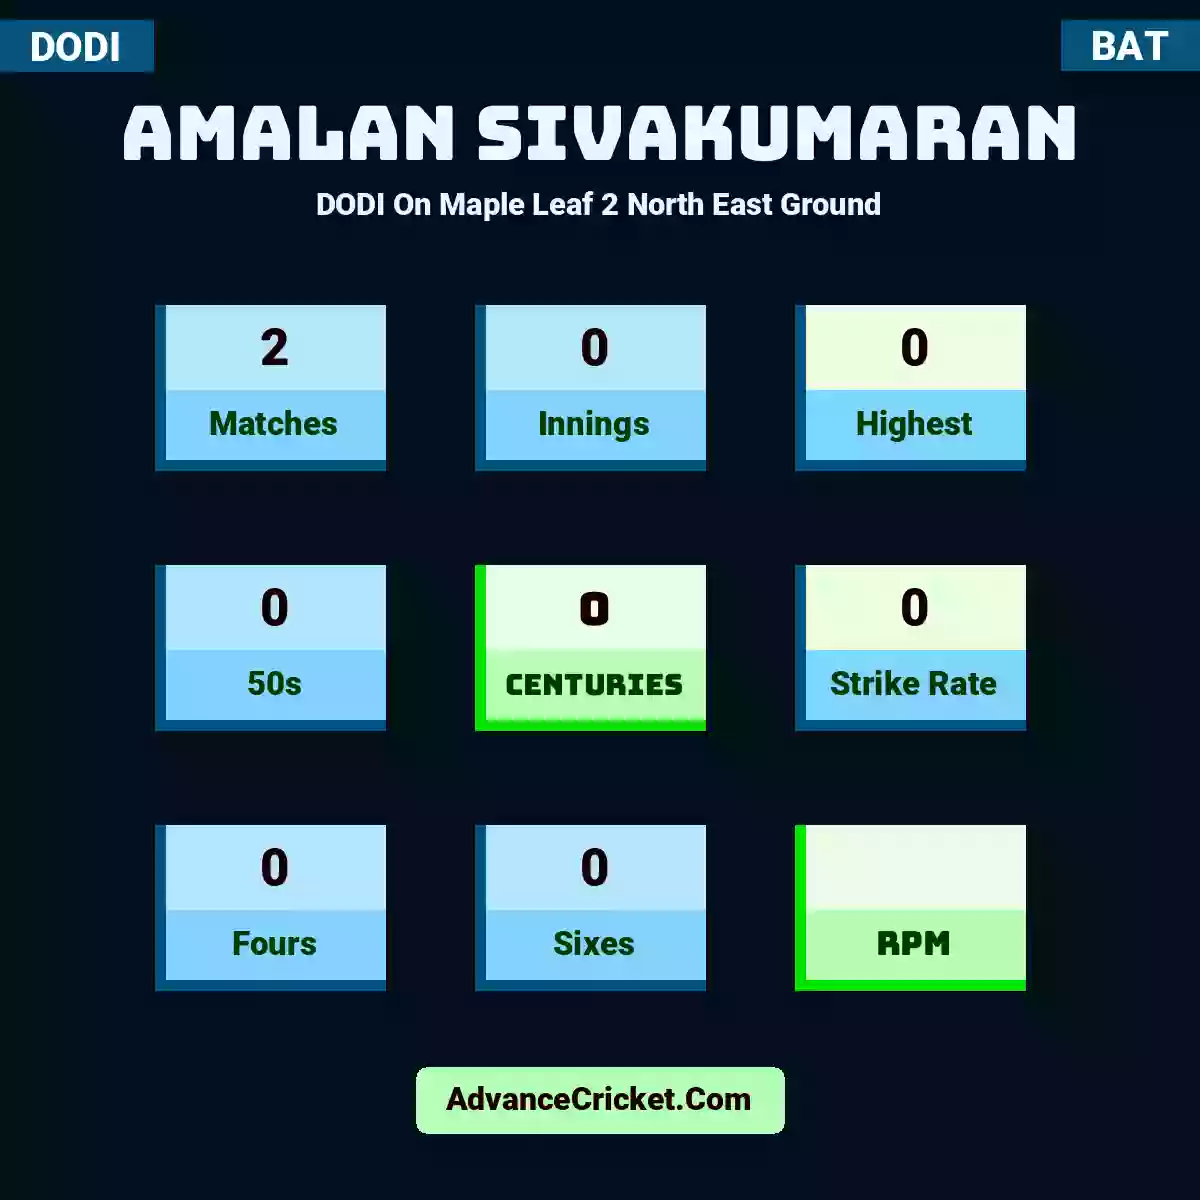 Amalan Sivakumaran DODI  On Maple Leaf 2 North East Ground, Amalan Sivakumaran played 2 matches, scored 0 runs as highest, 0 half-centuries, and 0 centuries, with a strike rate of 0. A.Sivakumaran hit 0 fours and 0 sixes.